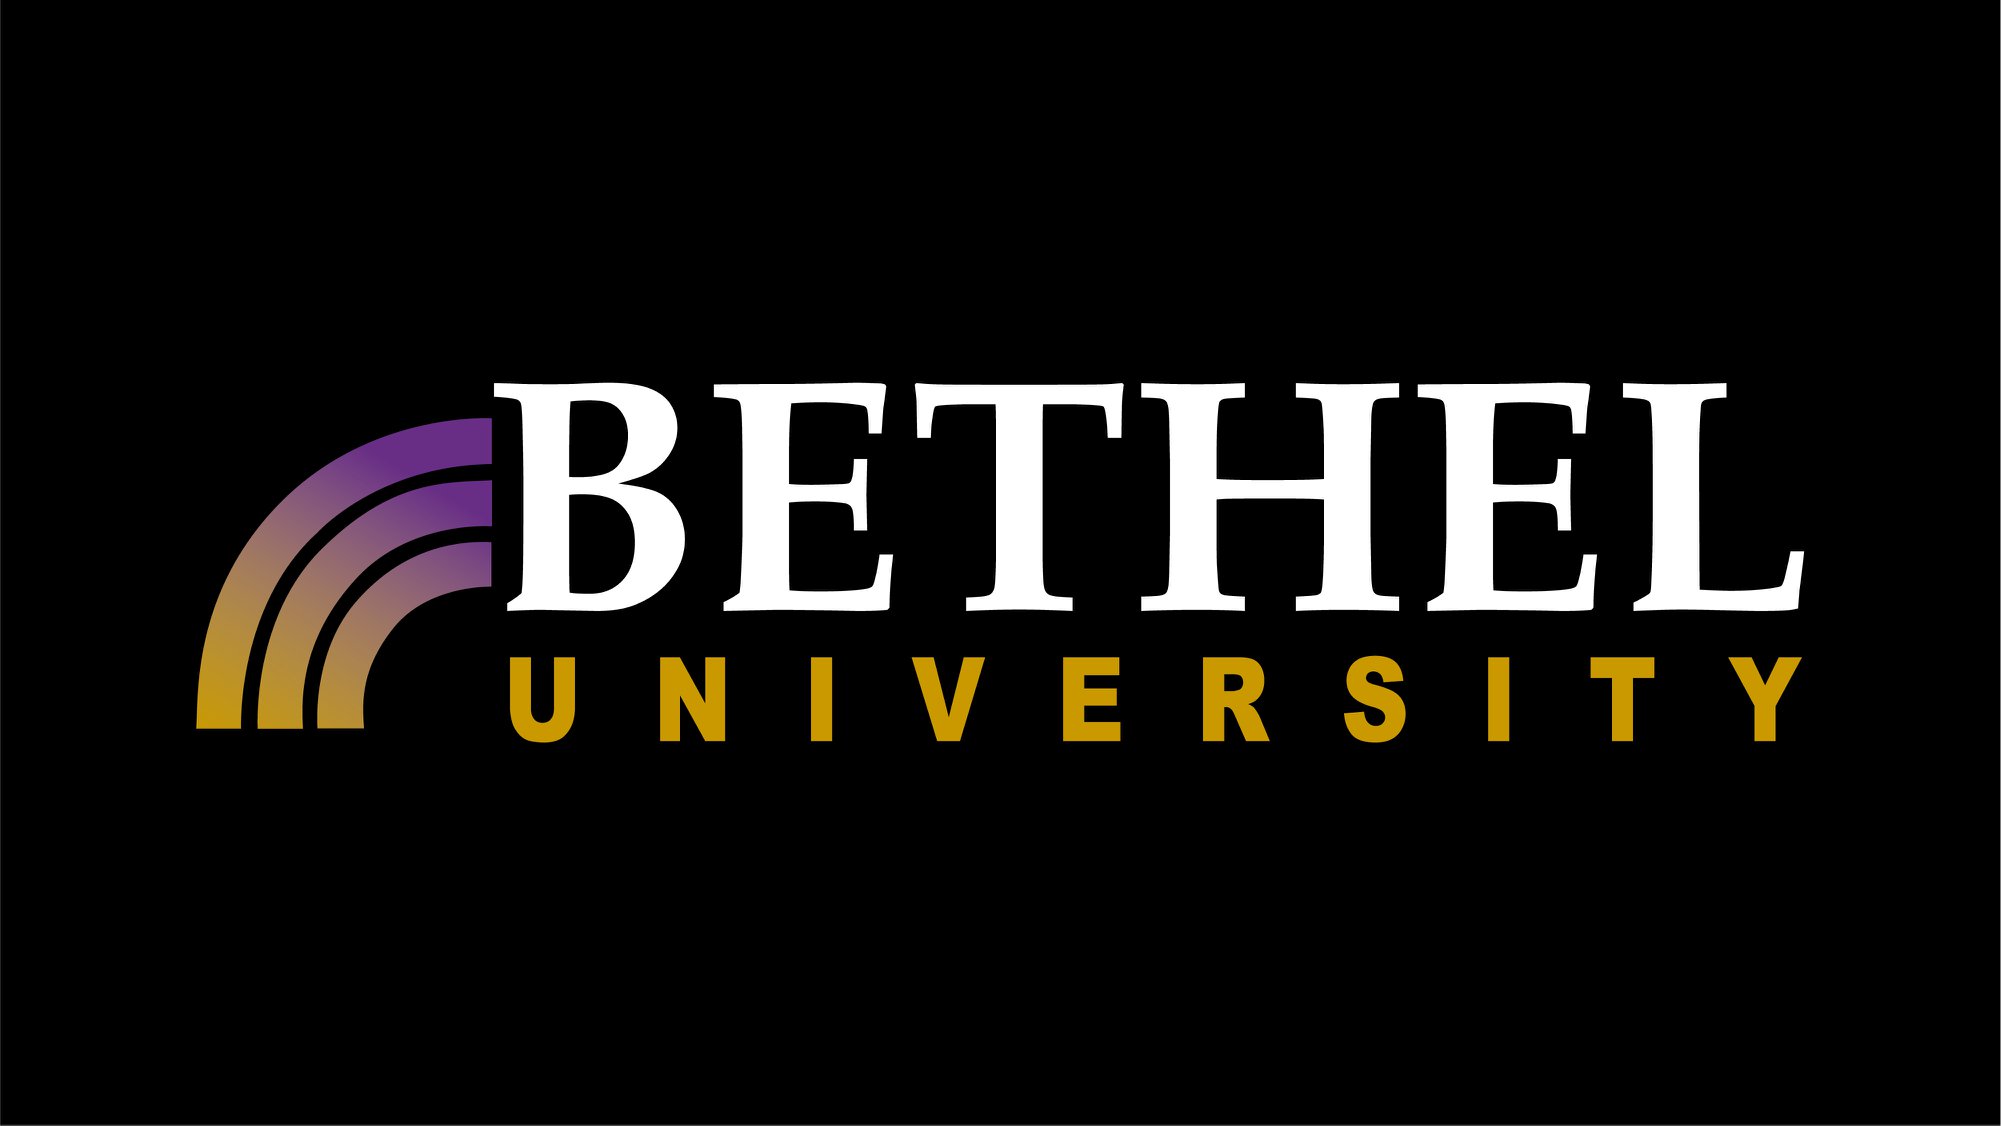 Bethel University student center's website wins national recognition